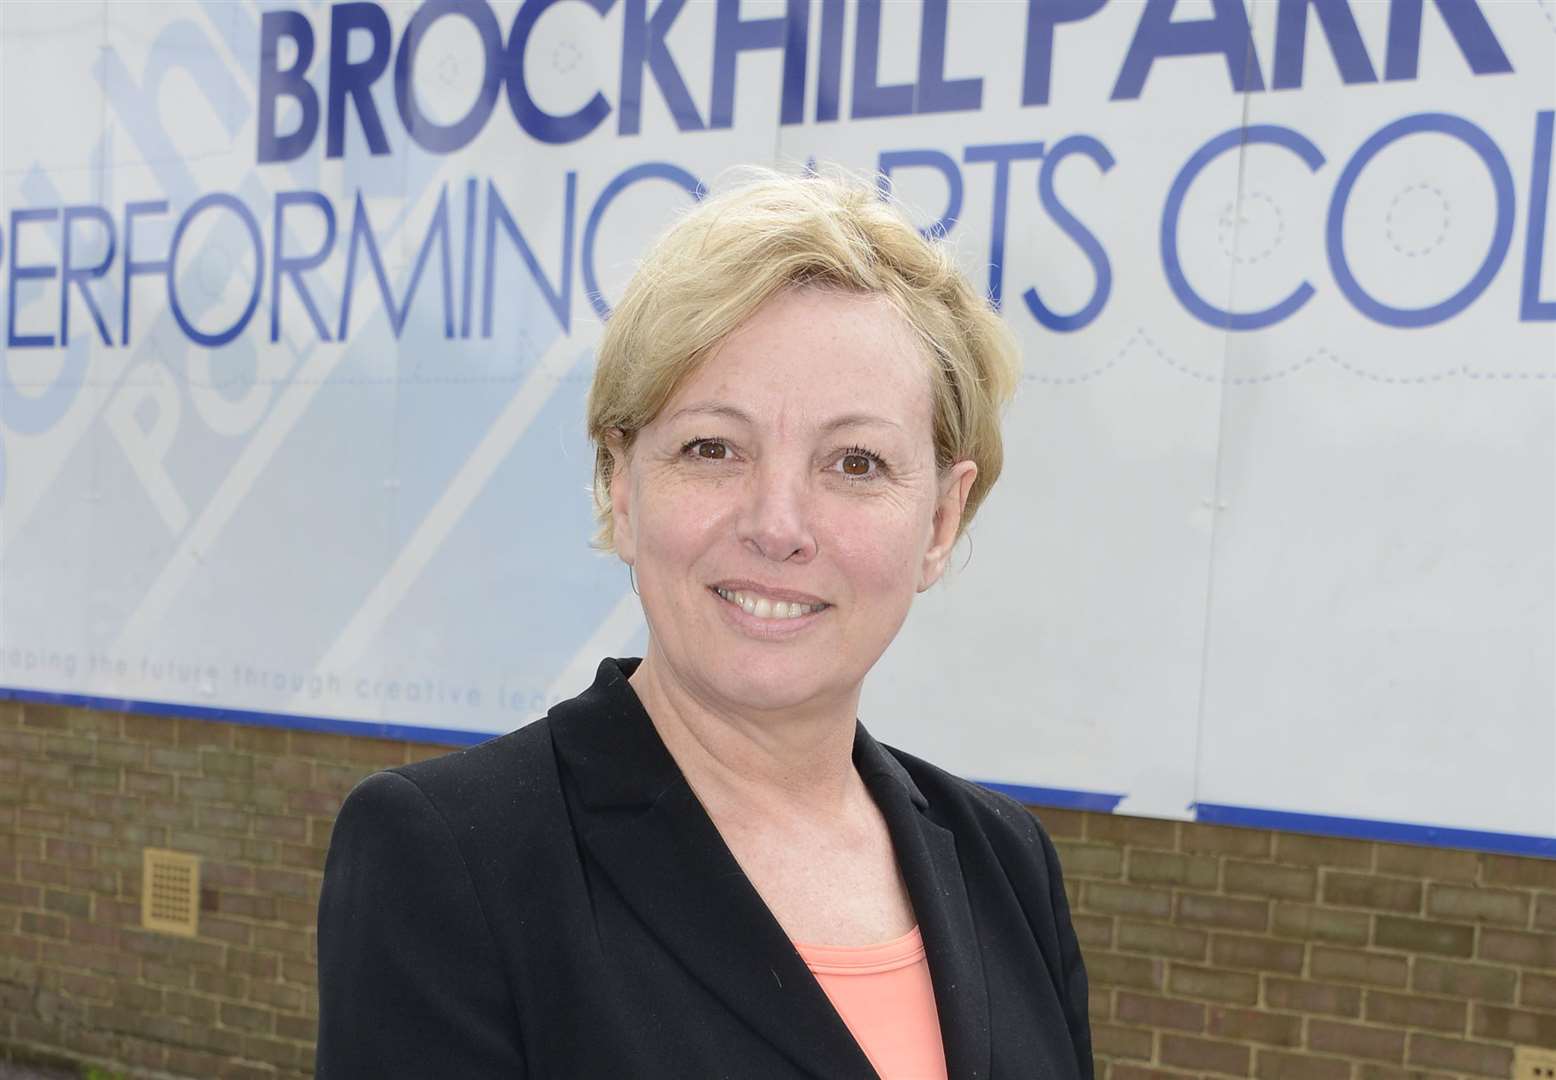 Brockhill Park School principal Sonette Schwartz. Picture: Paul Amos